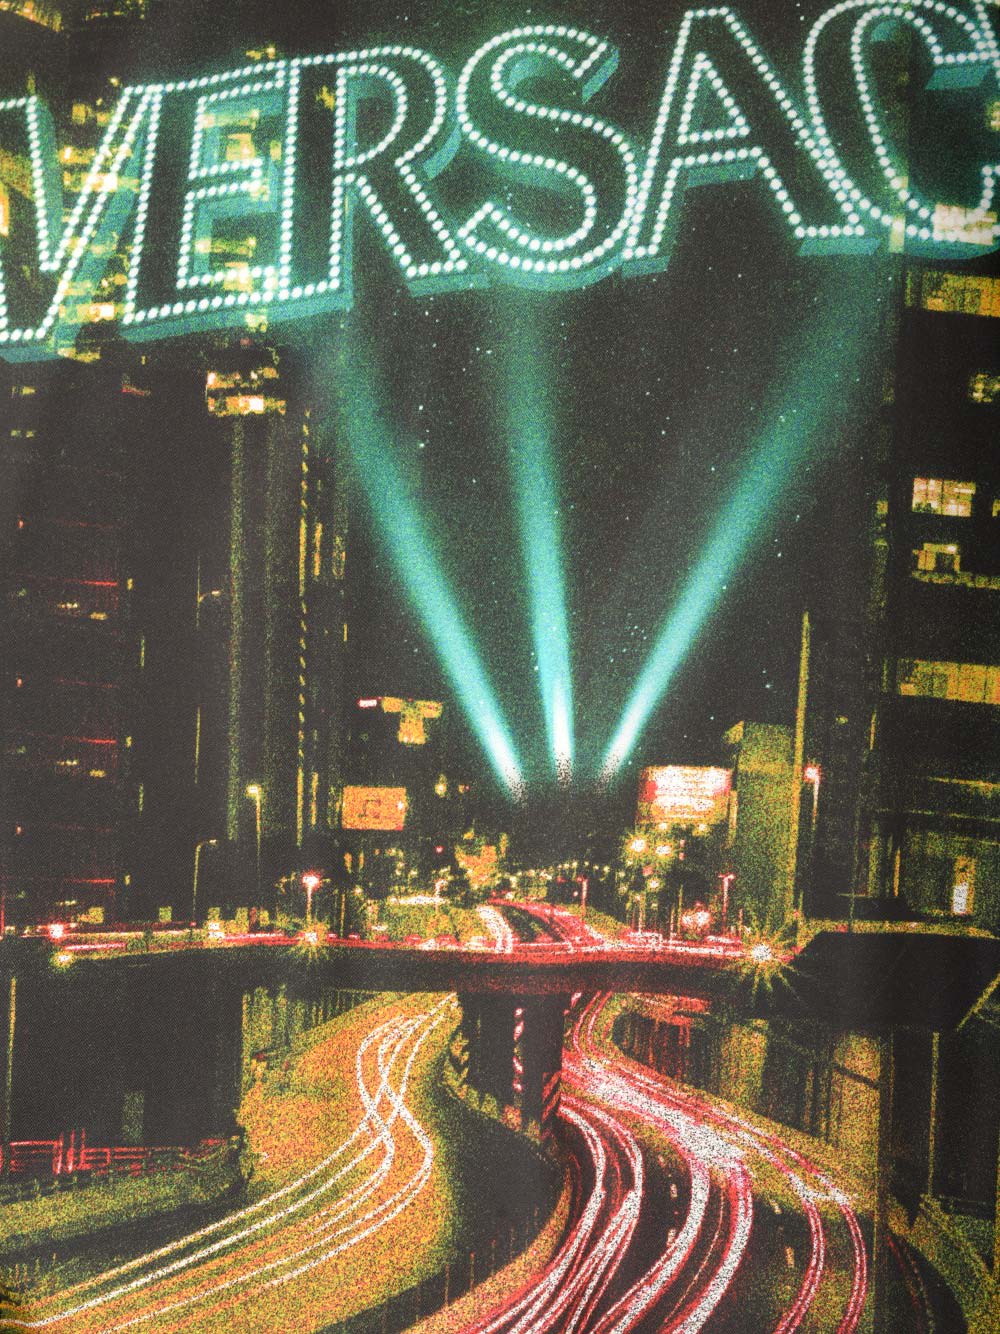 Shop Versace City Lights Bomber Jacket In Multicolour